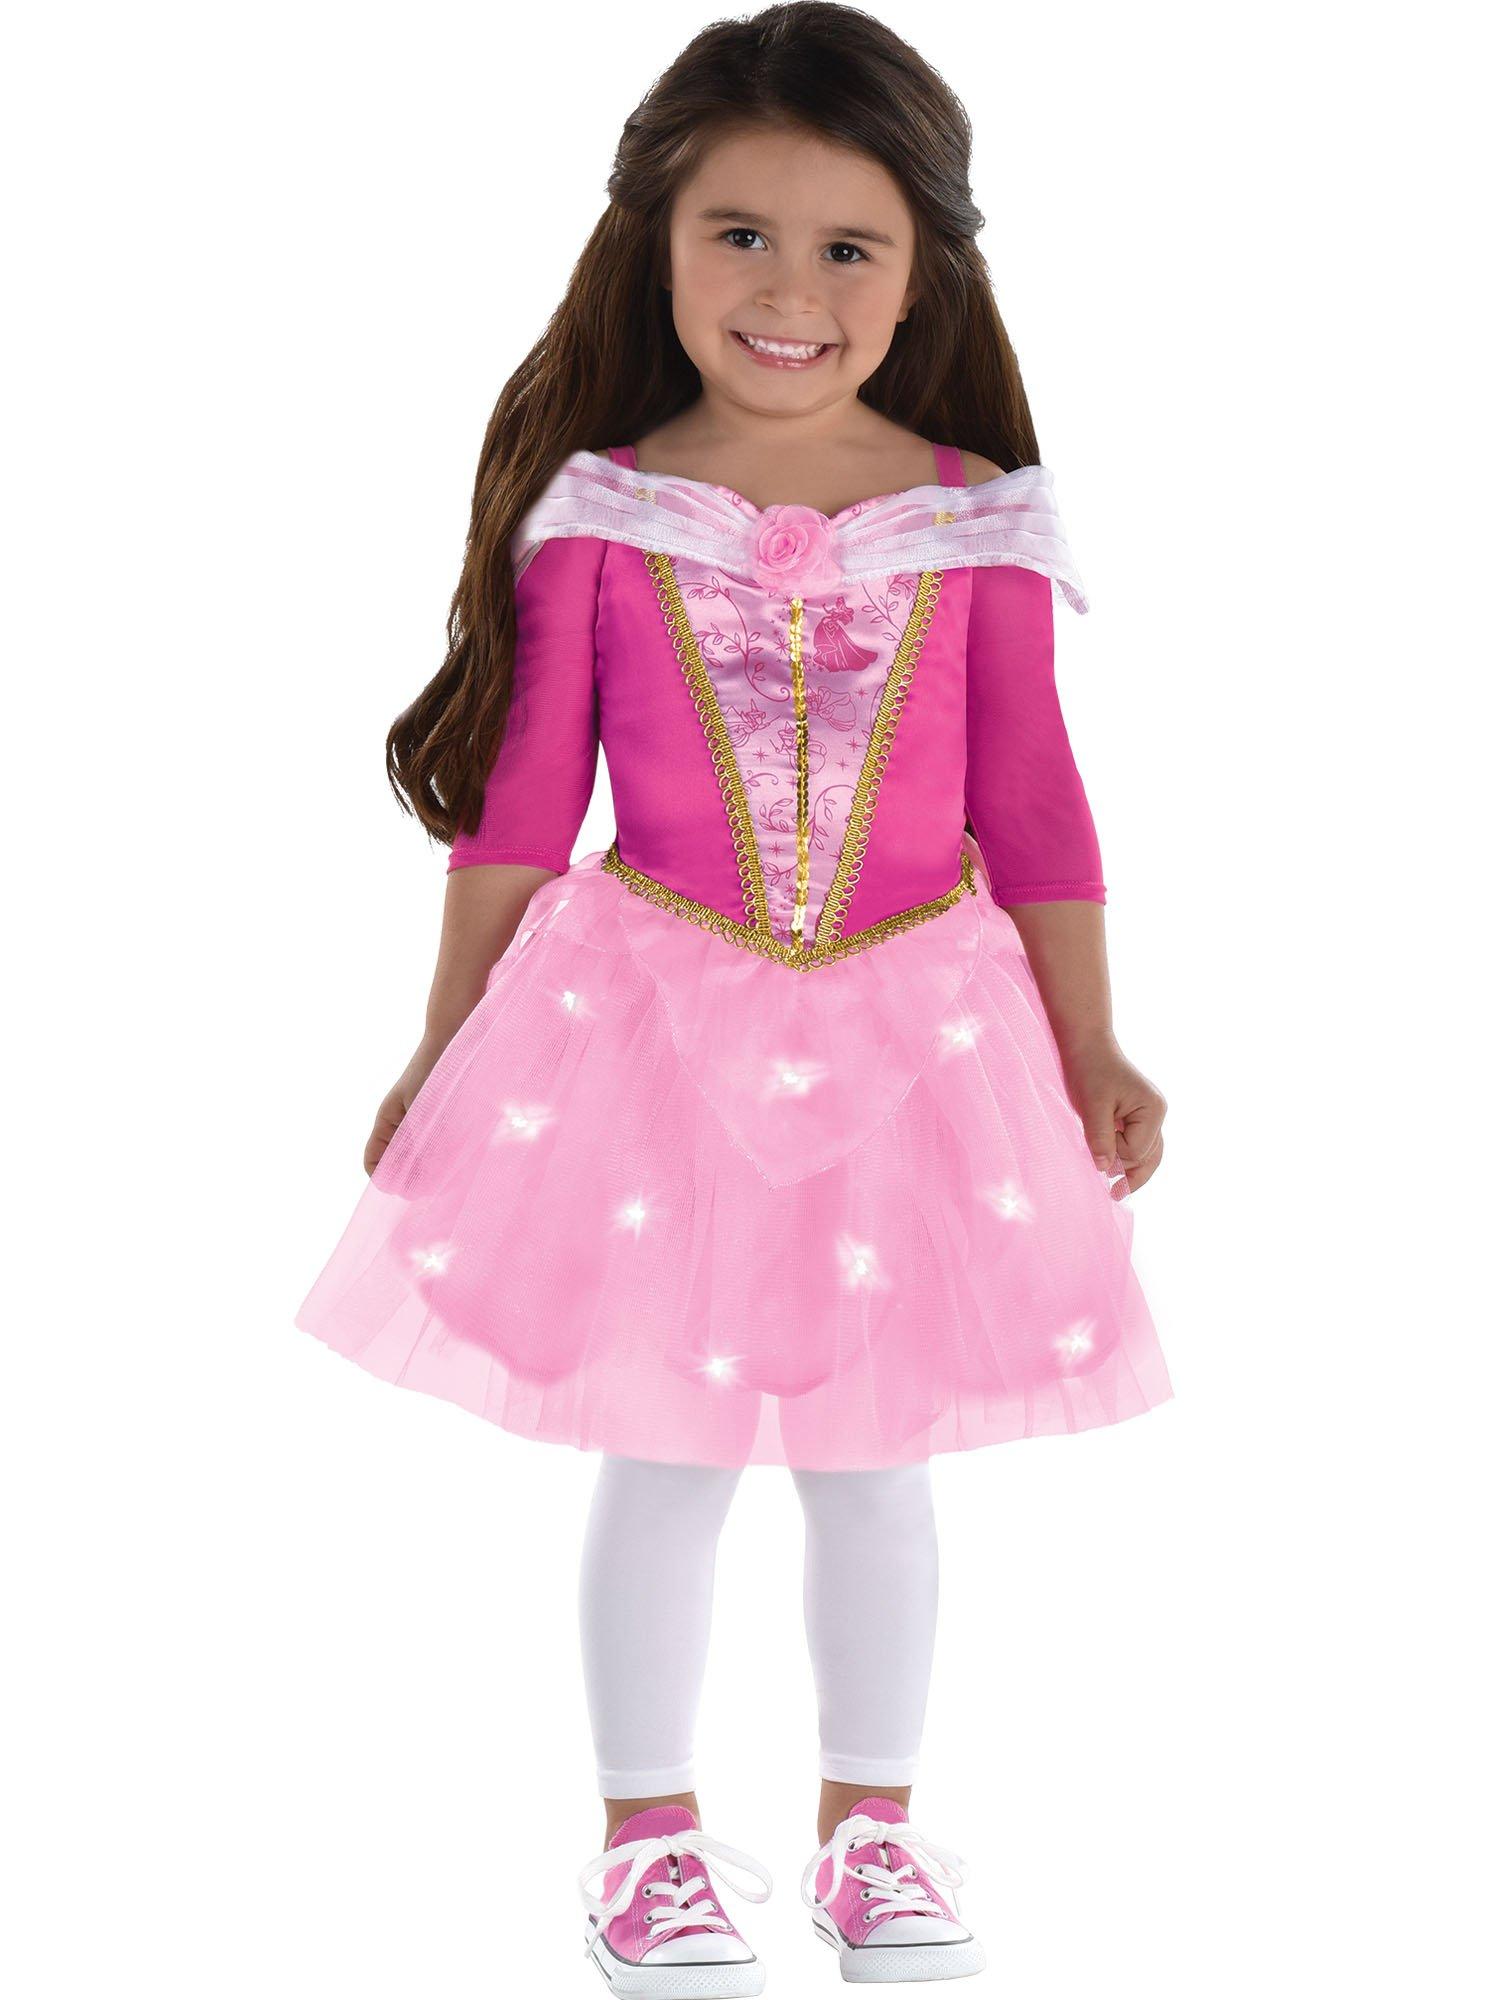 Sleeping Beauty Trick or Treat Bag - Personalized Princess Aurora Halloween  Bag